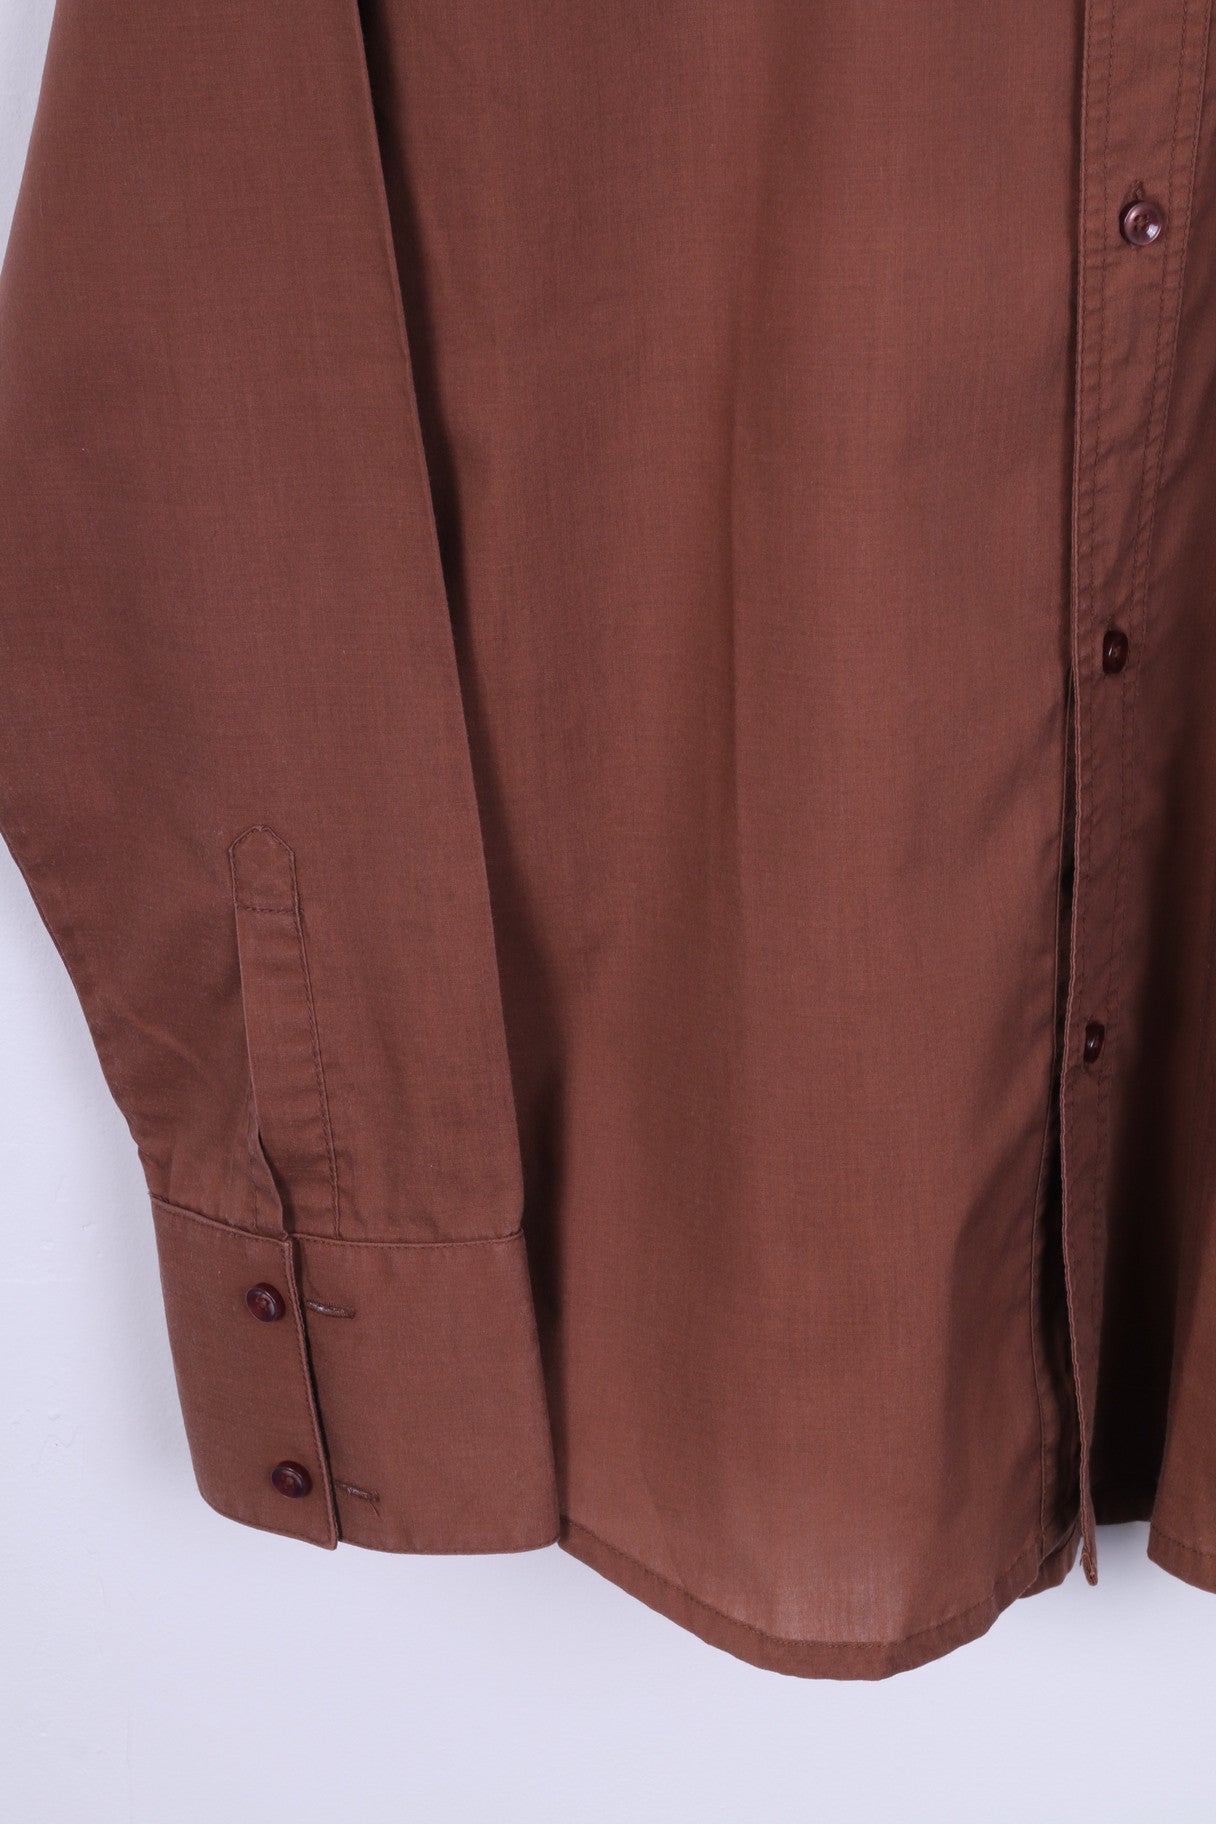 G-Star Mens XL (M) Casual Shirt Brown Long Sleeve